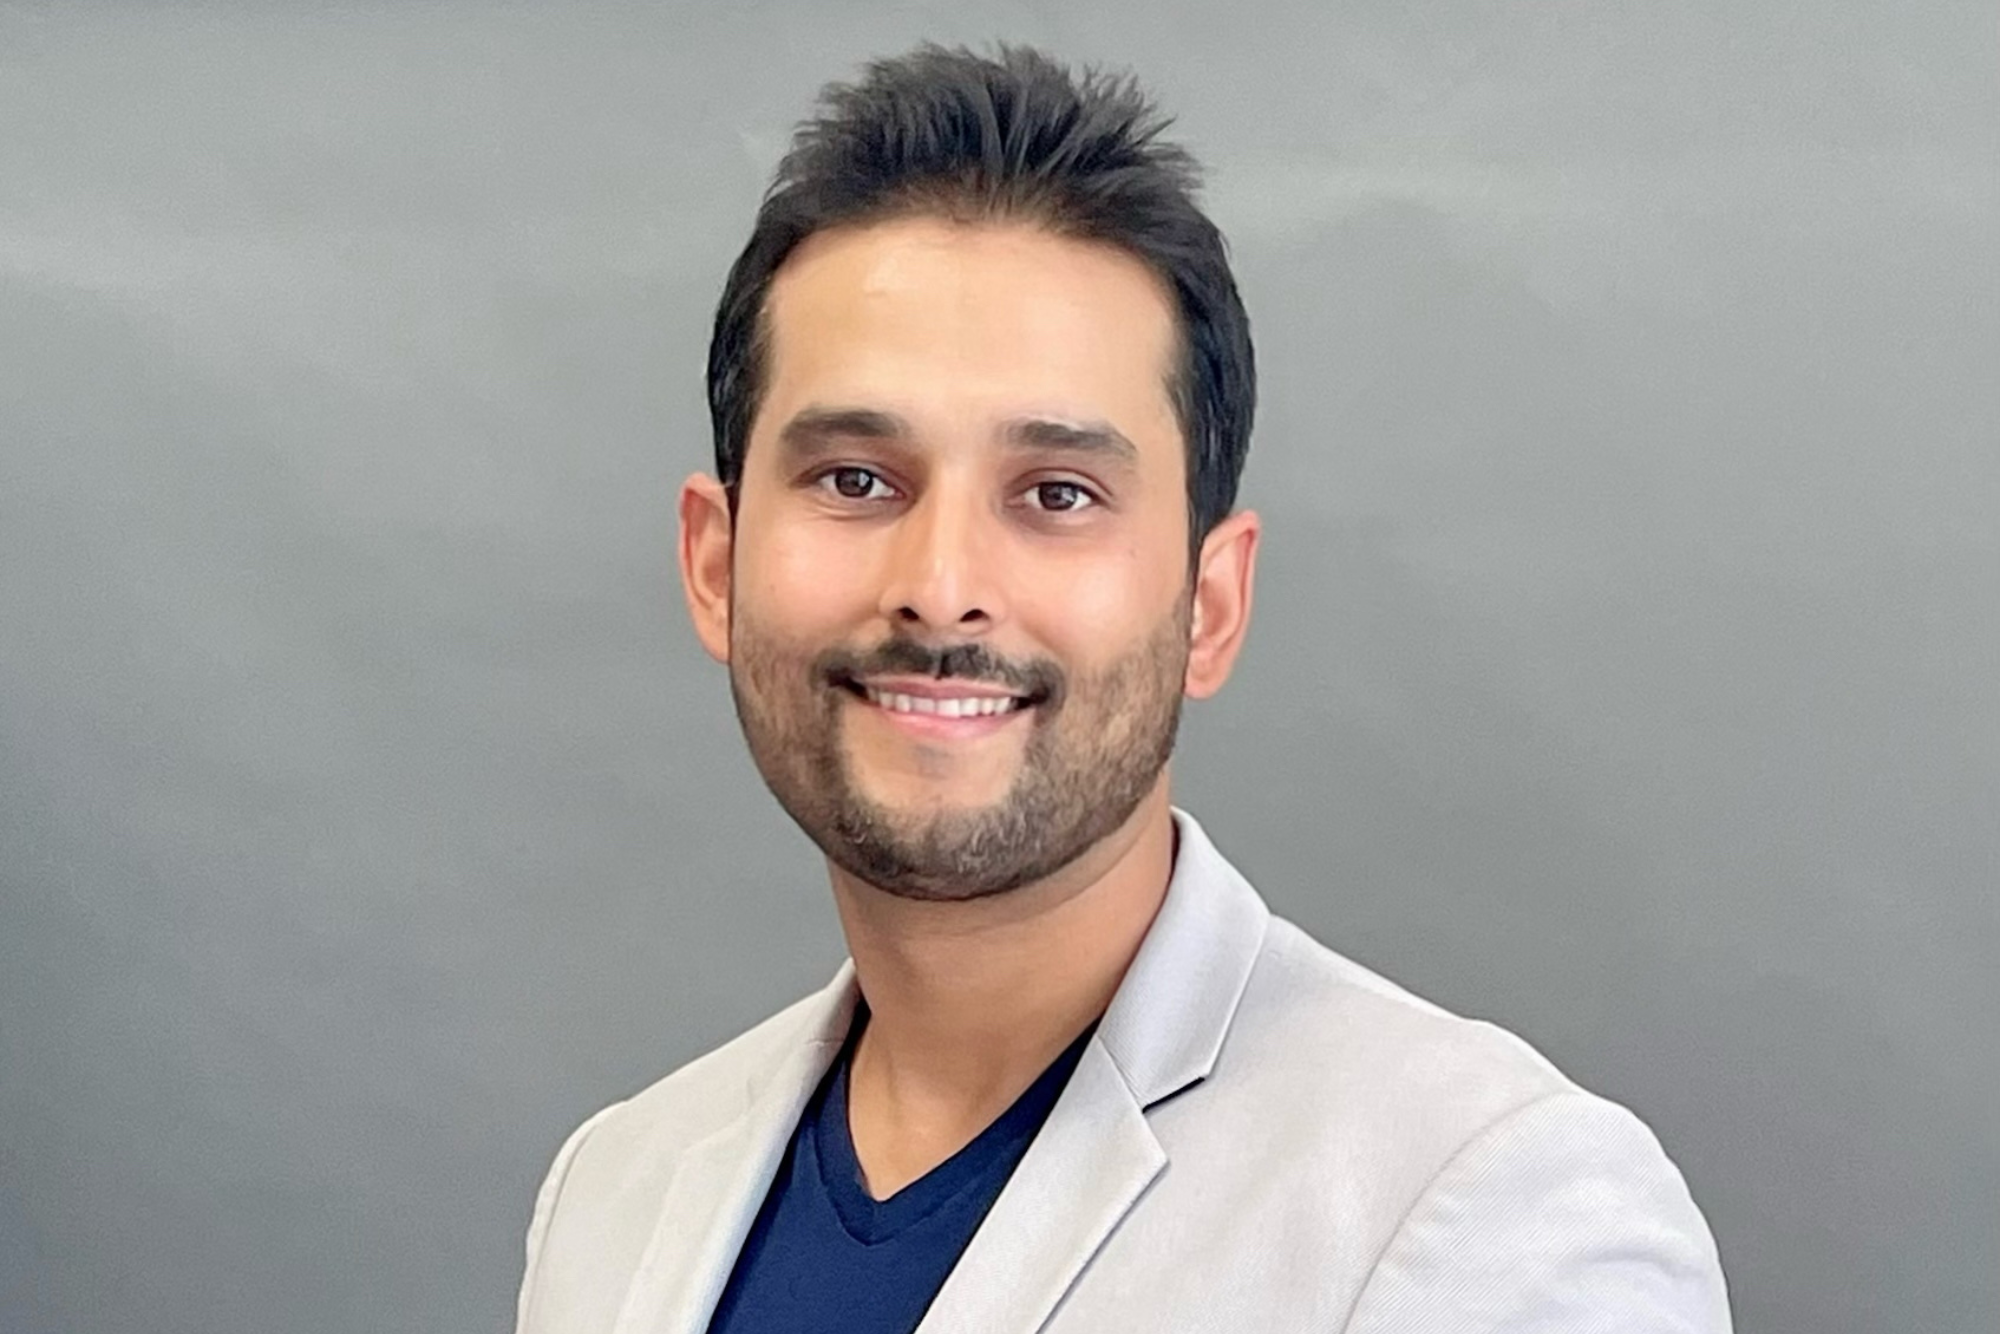 Varun Badhwar, Endor Labs’ co-founder and CEO